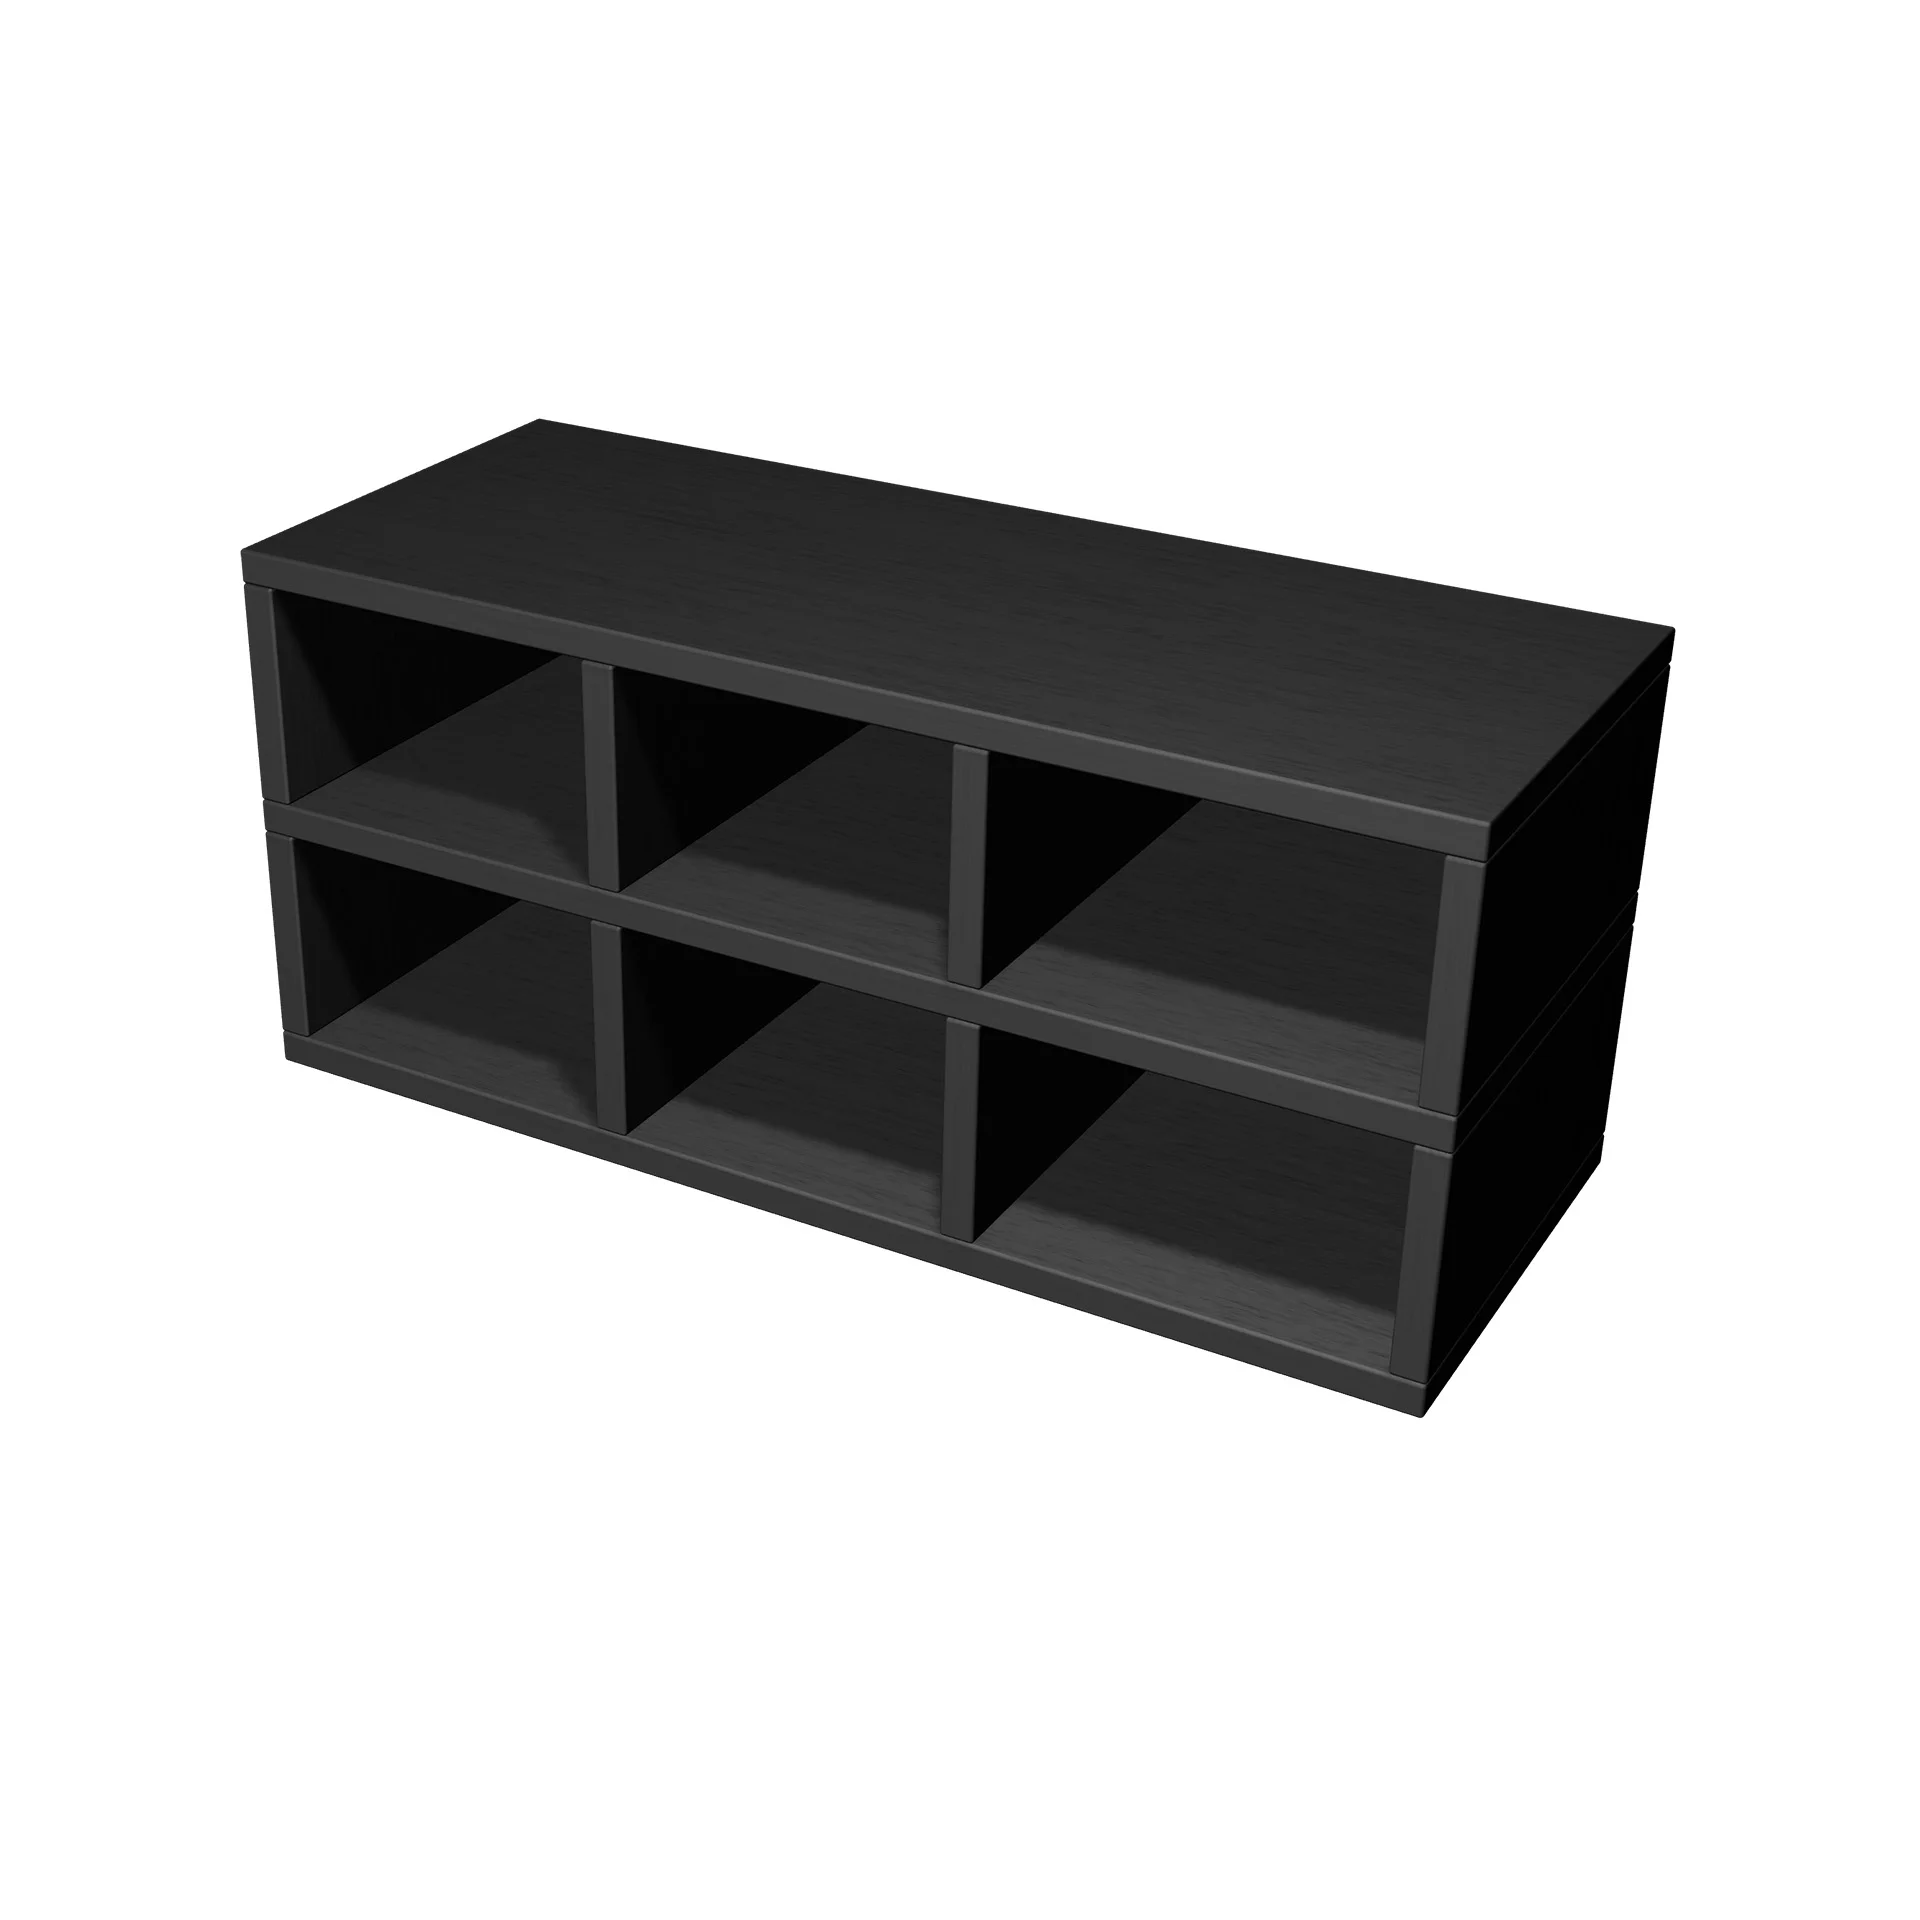 TSFC034 in zwart eiken meubelpaneel